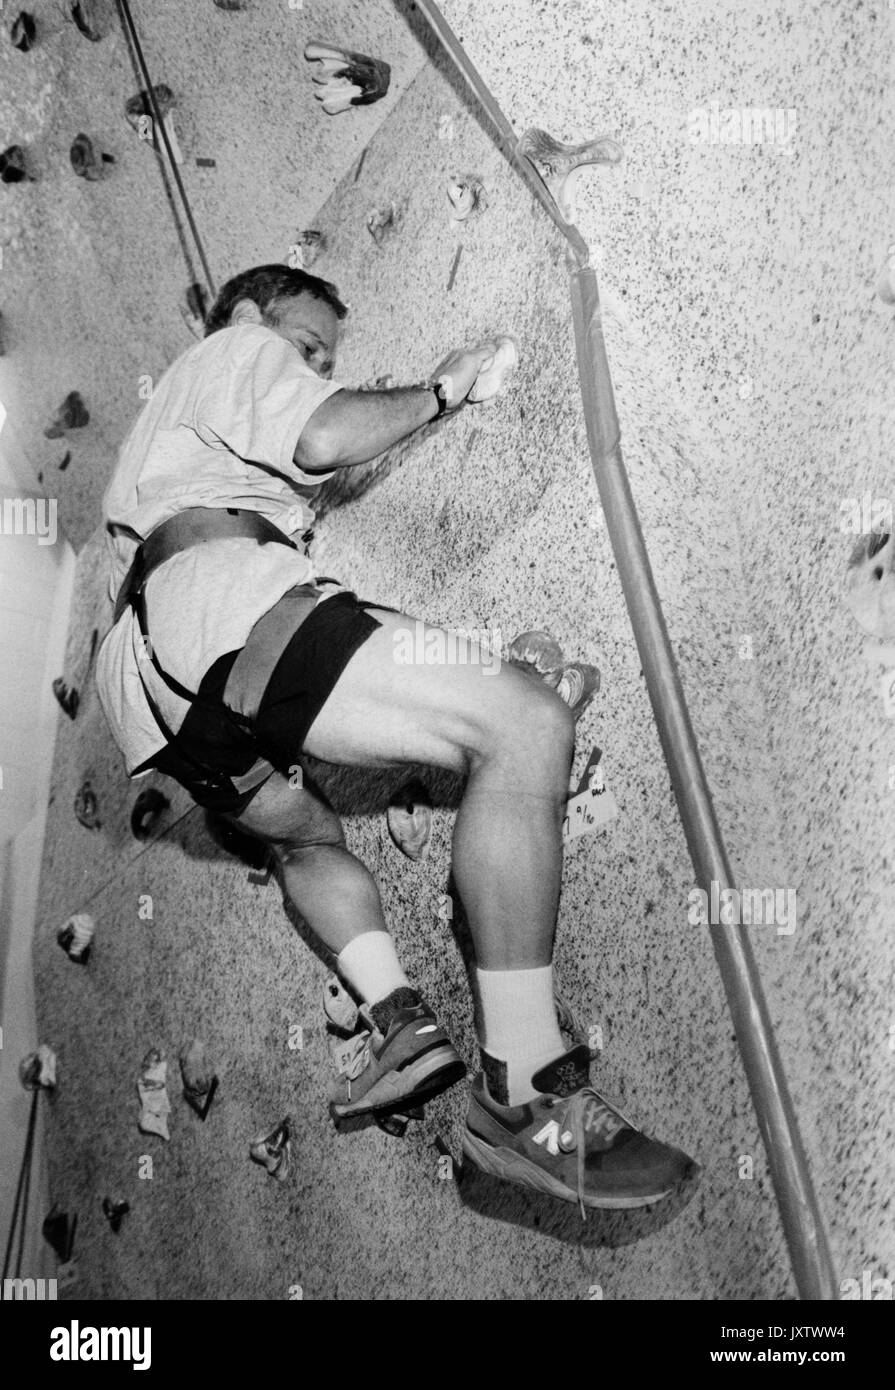 Michael rubens bloomberg, candid shot, Bloomberg è arrampicata indoor un muro di scalata, ca 47 anni di età, 1997. Foto Stock